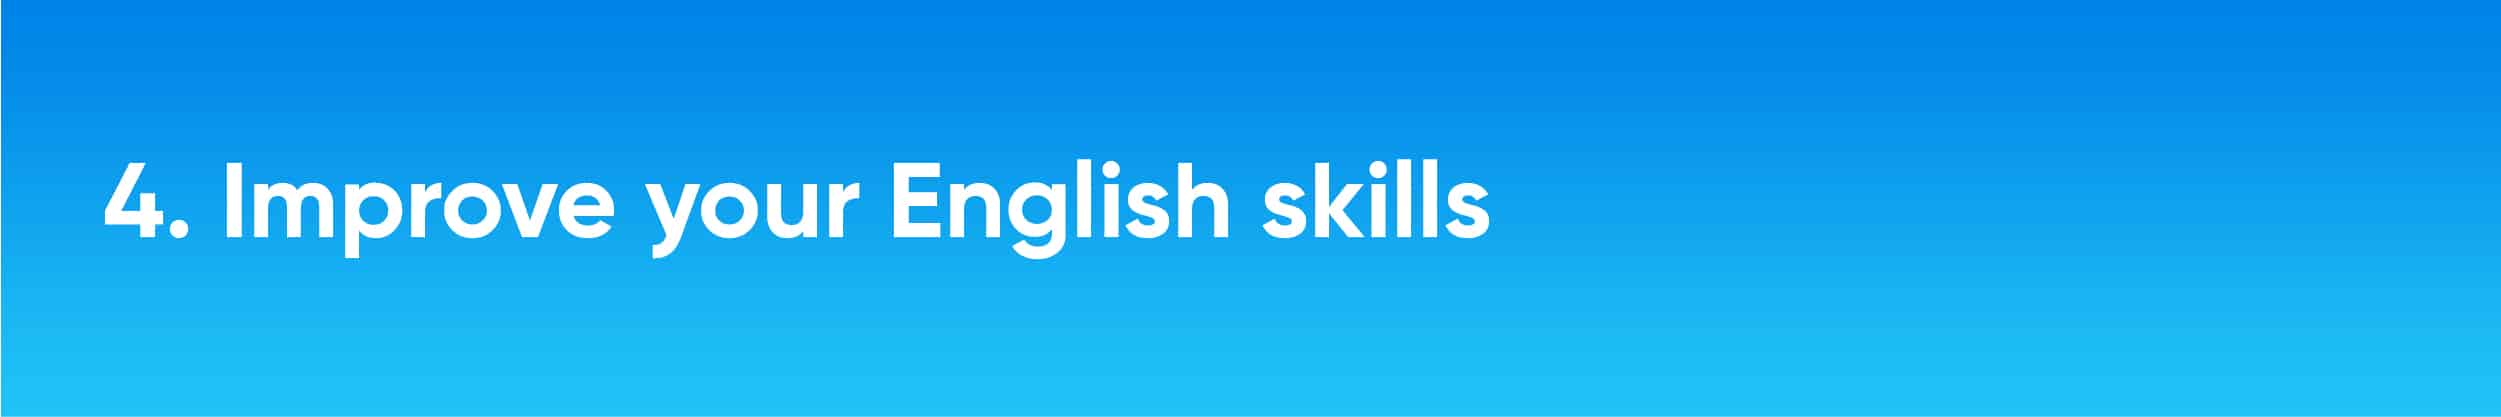 Four Improve your English skills